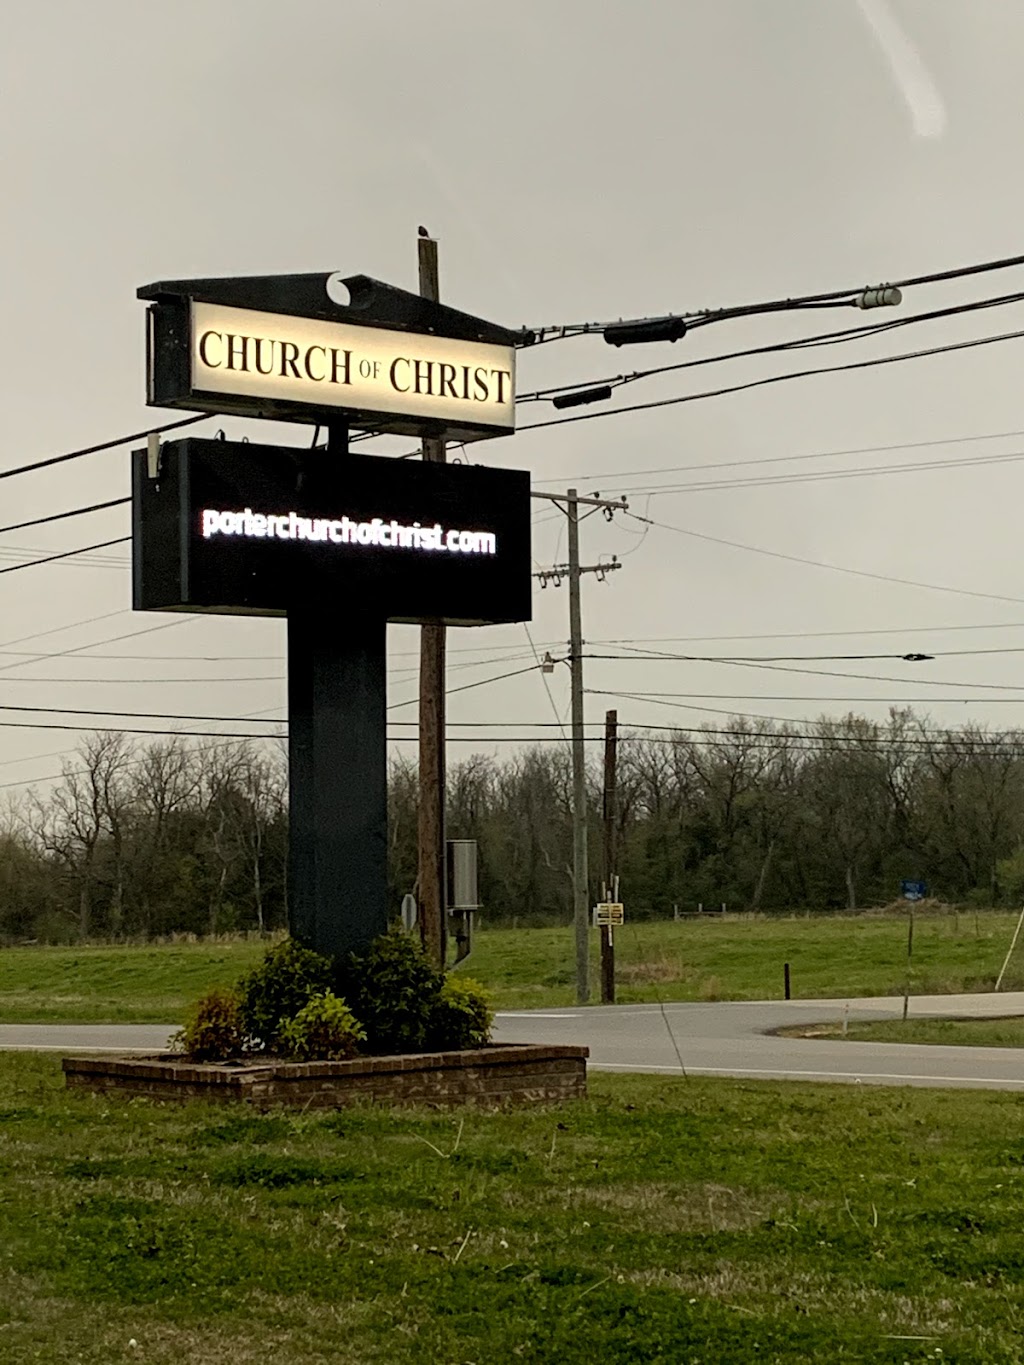 Porter Church of Christ | 120 S 8th St, Porter, OK 74454, USA | Phone: (918) 483-3641